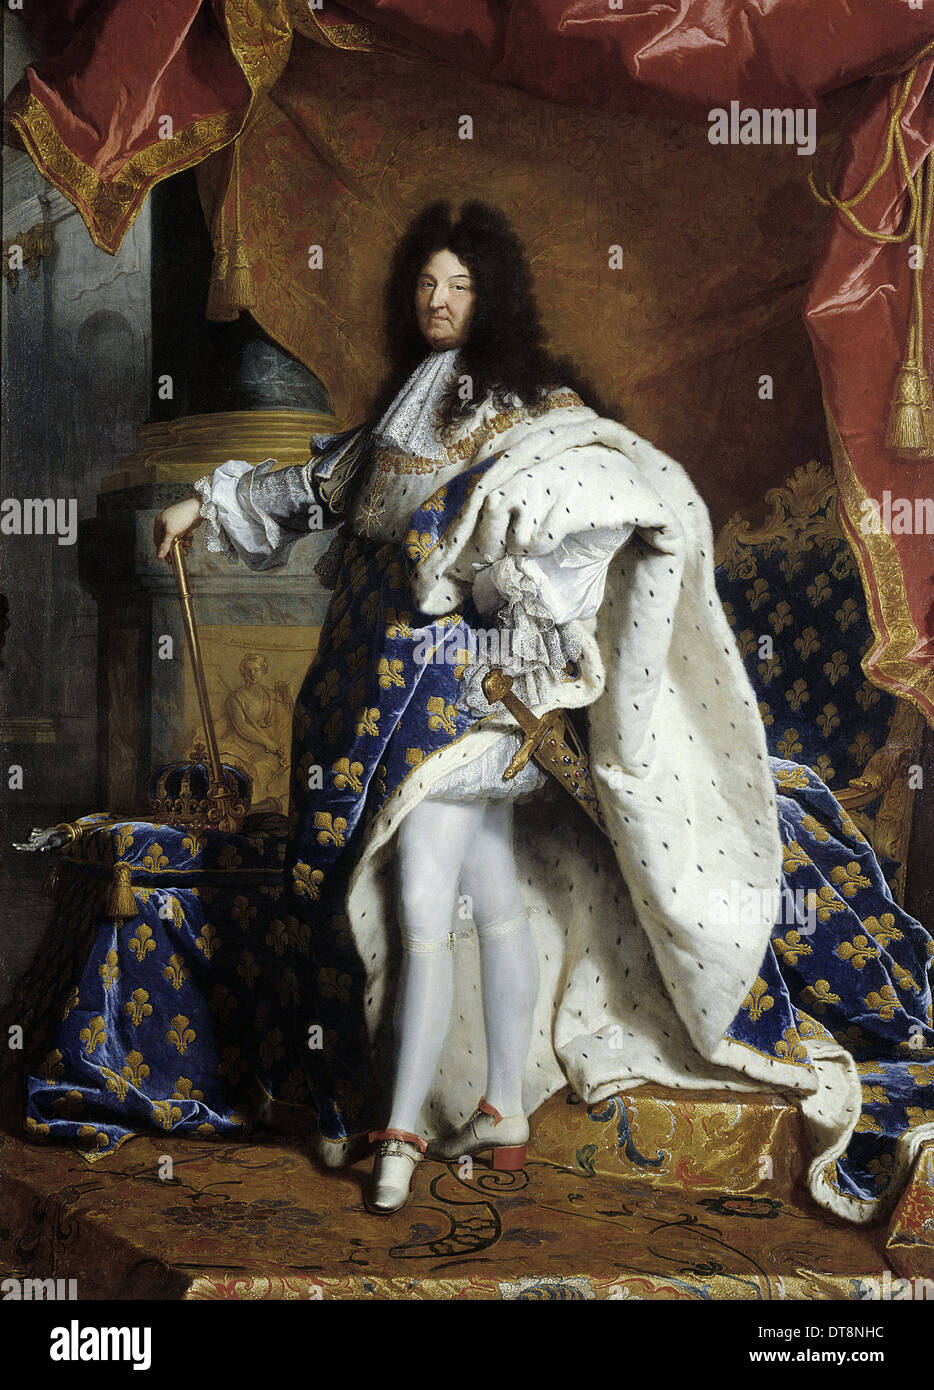 Hyacinthe Rigaud - Portrait of Louis XIV in his Coronation robe - 1701 - Louvre museum Paris Stock Photo